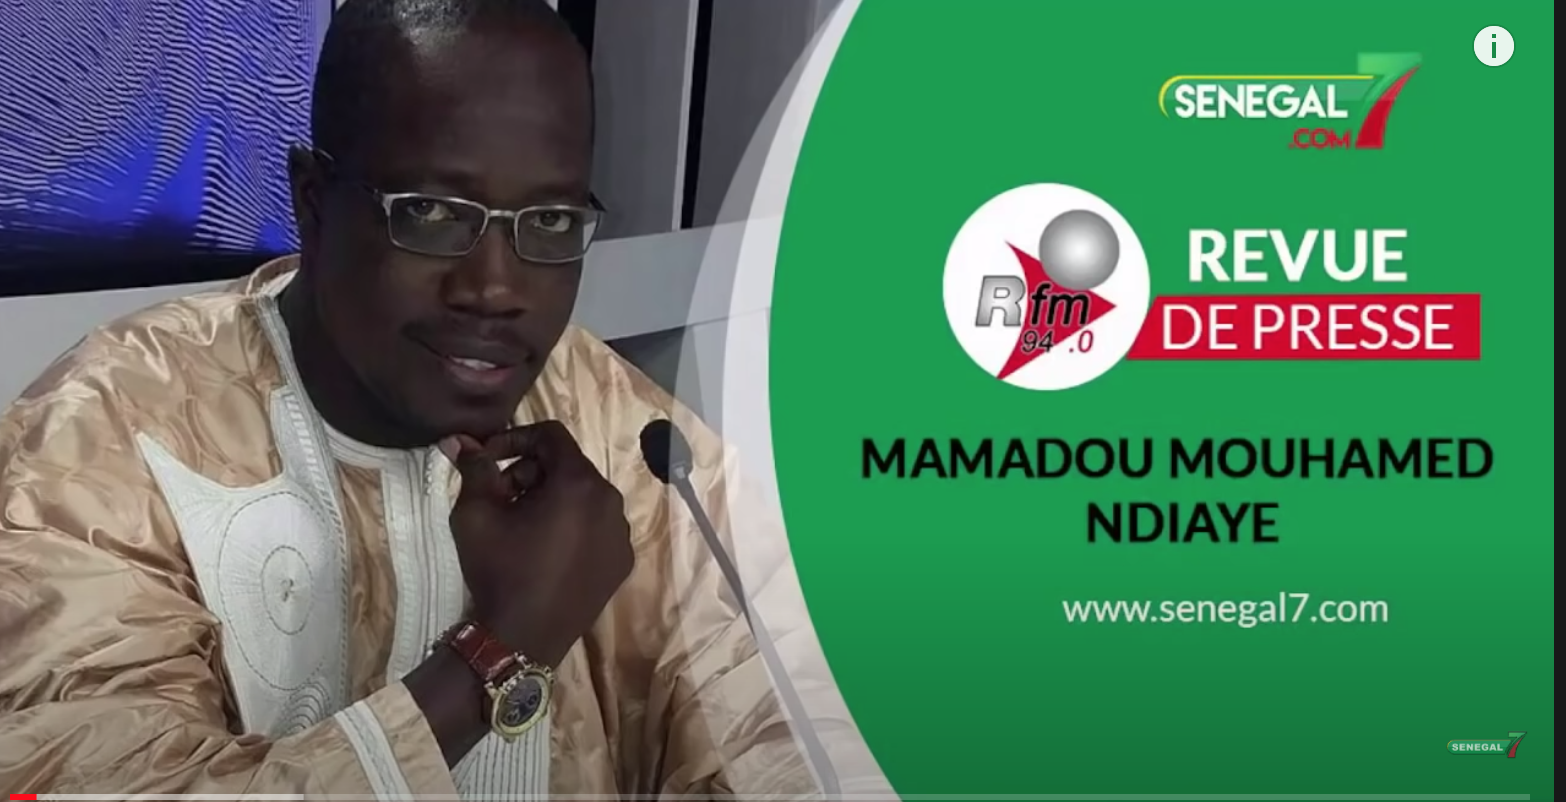 Revue de presse rfm du mercredi 14 juillet 2021 par Mamadou Mouhamed Ndiaye